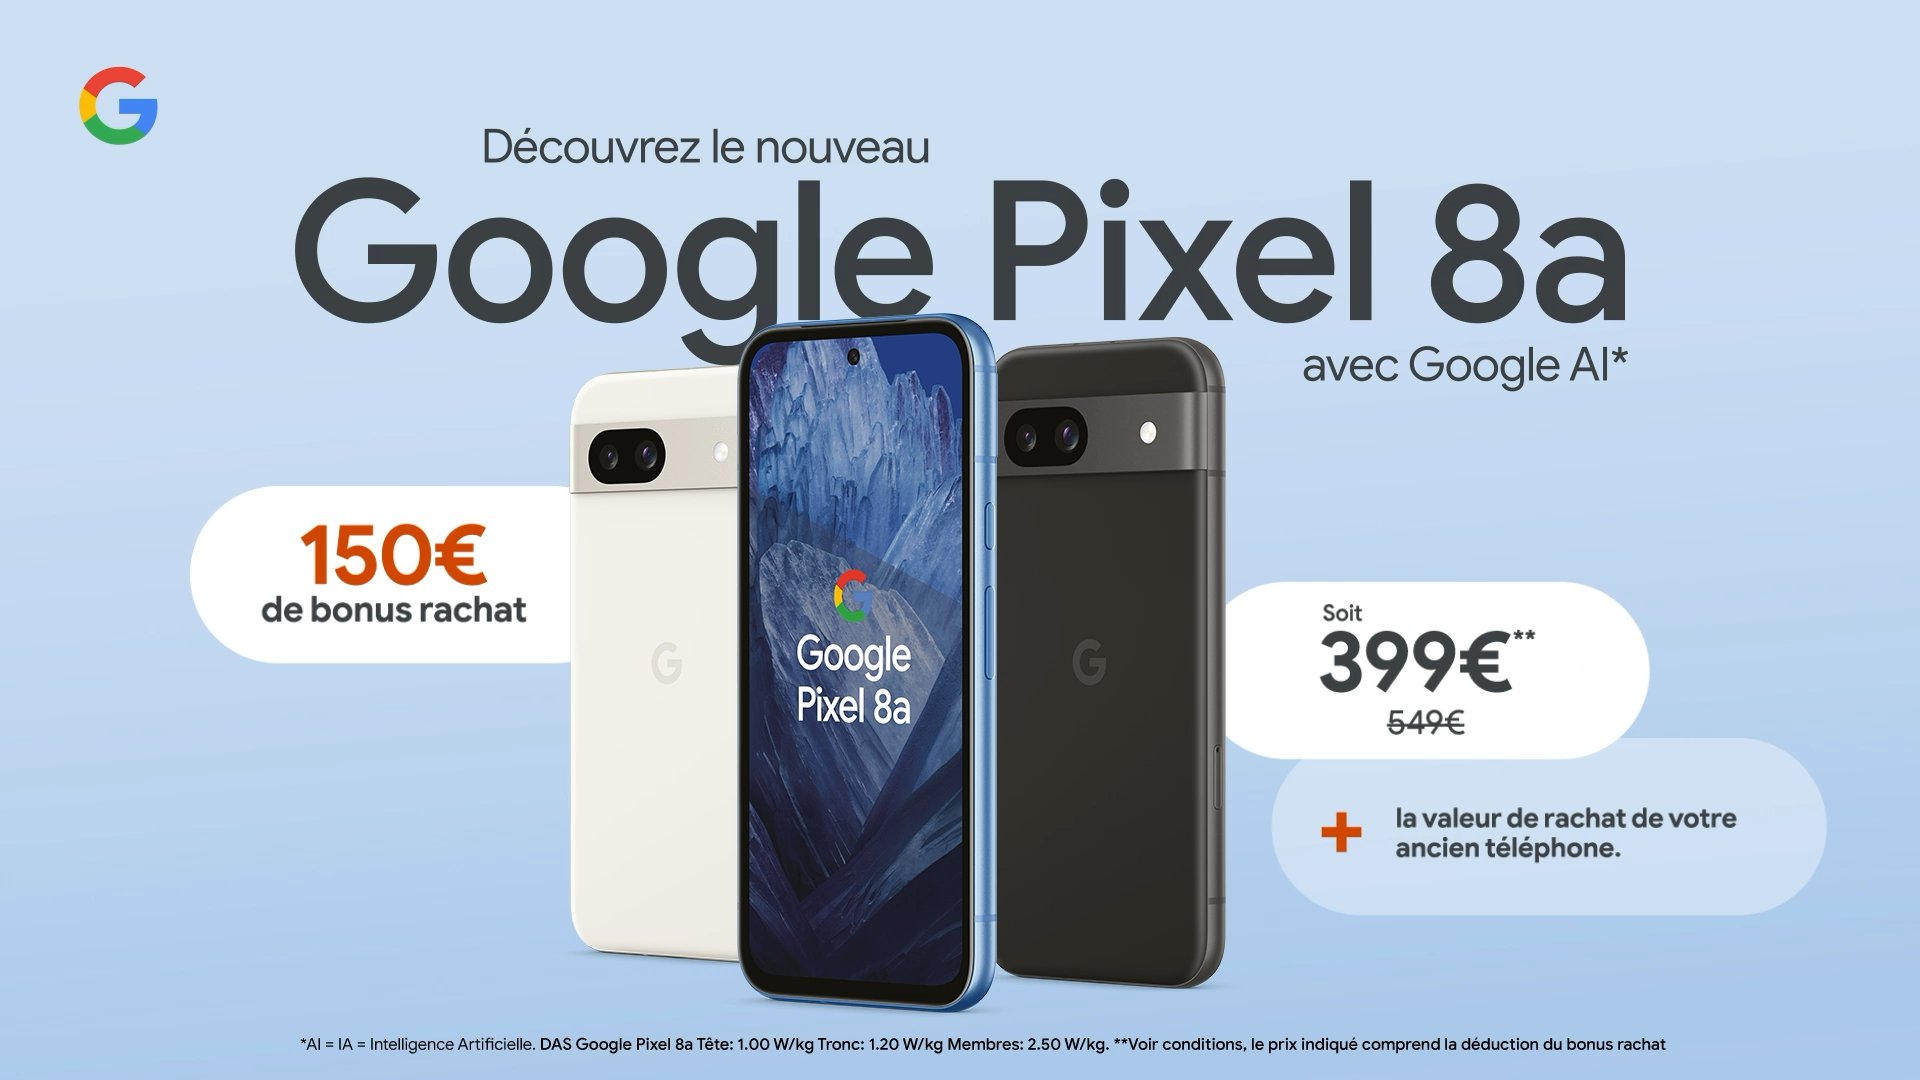 Google Pixel 8a leaked European pricing